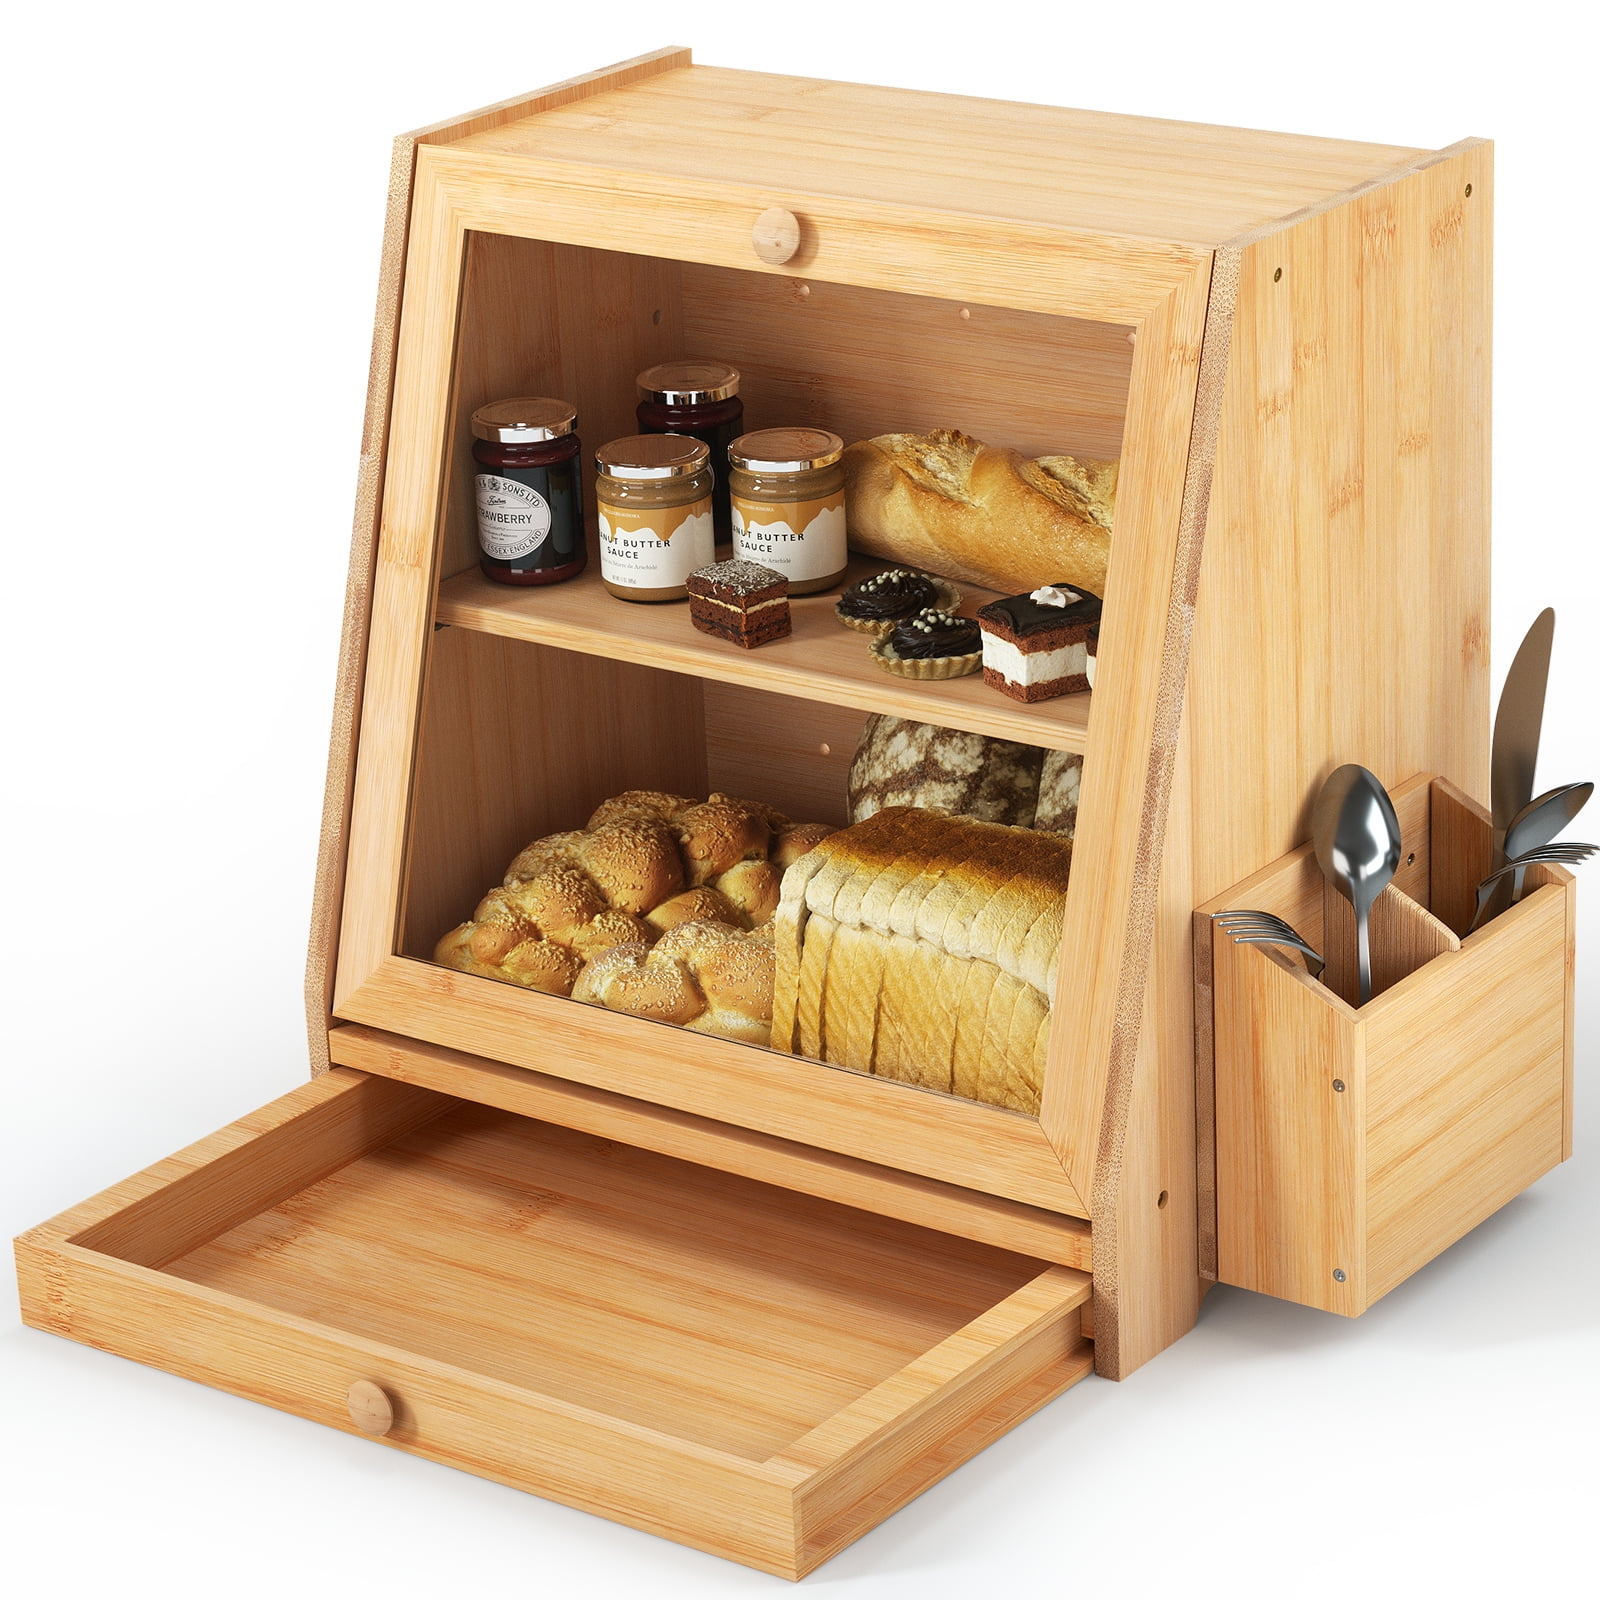 ShiYuan TQVAI Natural Bamboo 2 Layer Large Bread Box for Kitchen